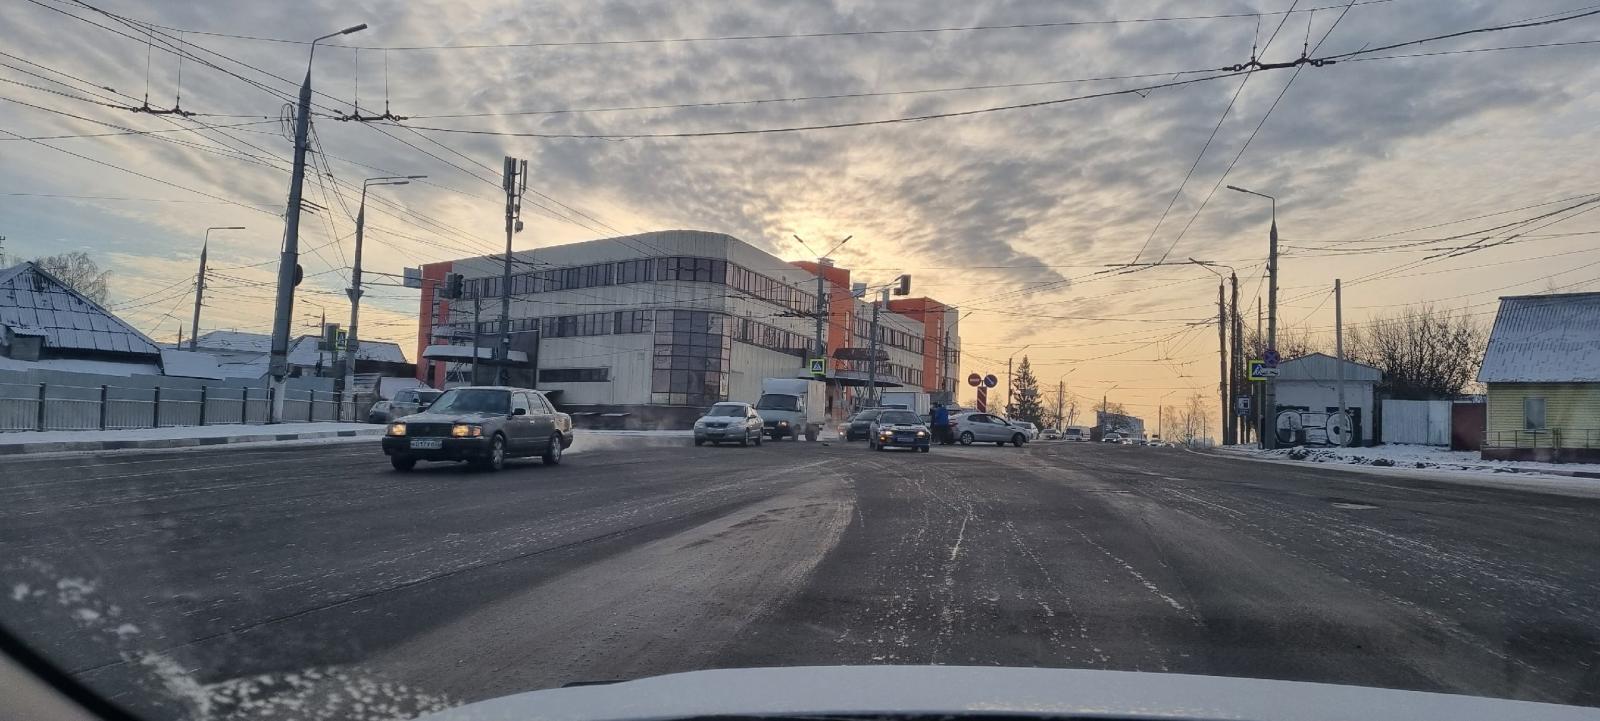 В рамках нацпроекта в Брянске отремонтируют 26 улиц за 1,13 миллиарда рублей